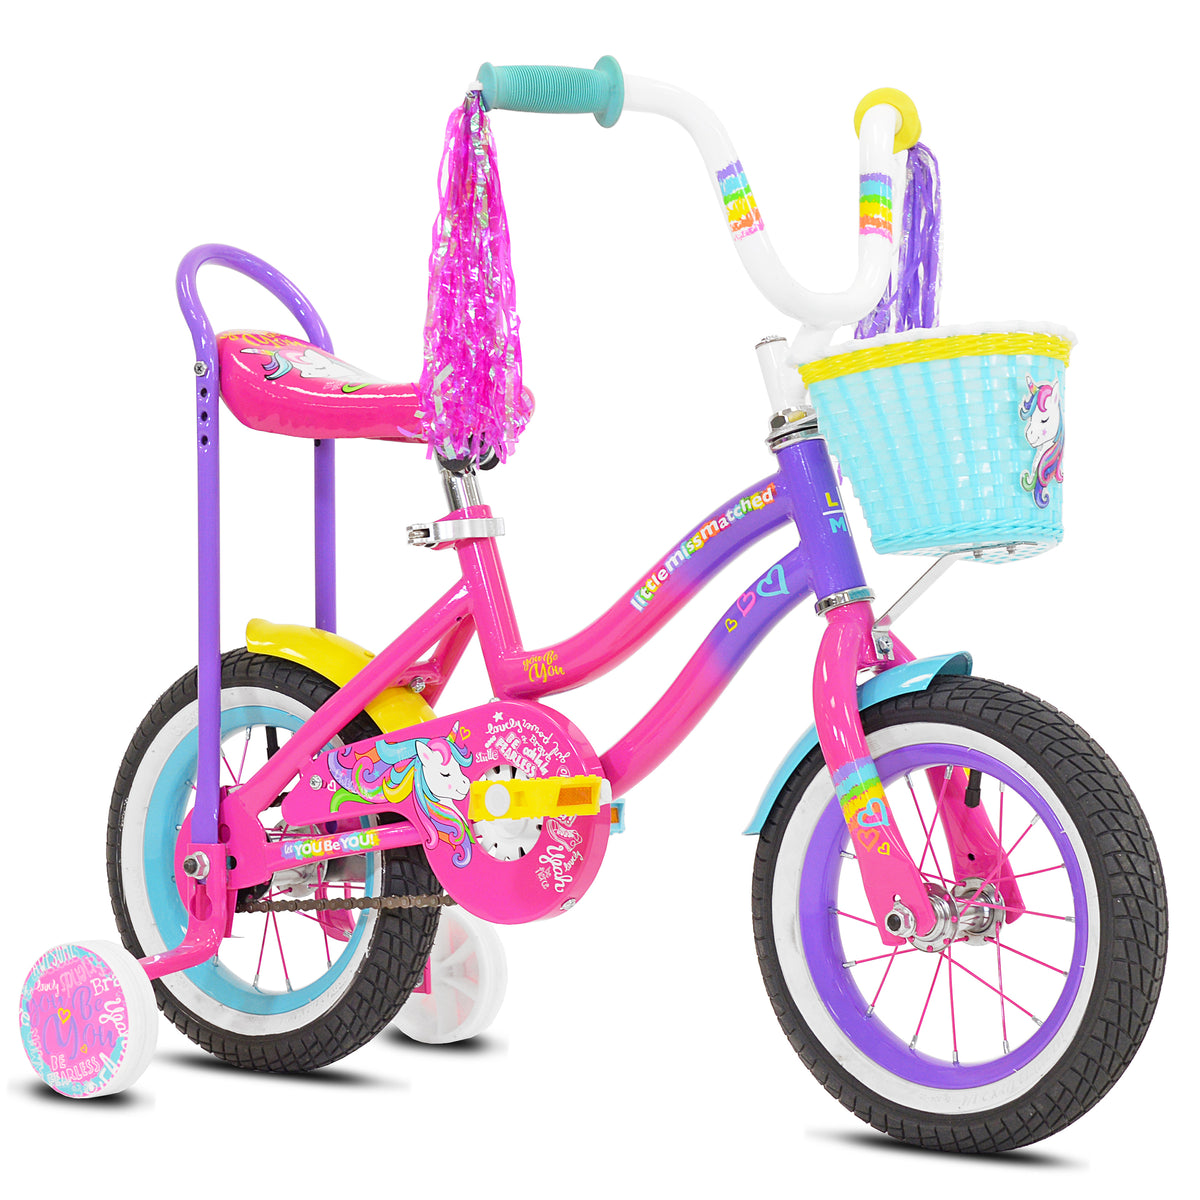 12" LittleMissMatched® Unicorn | Cruiser Bike for Kids Ages 2-4